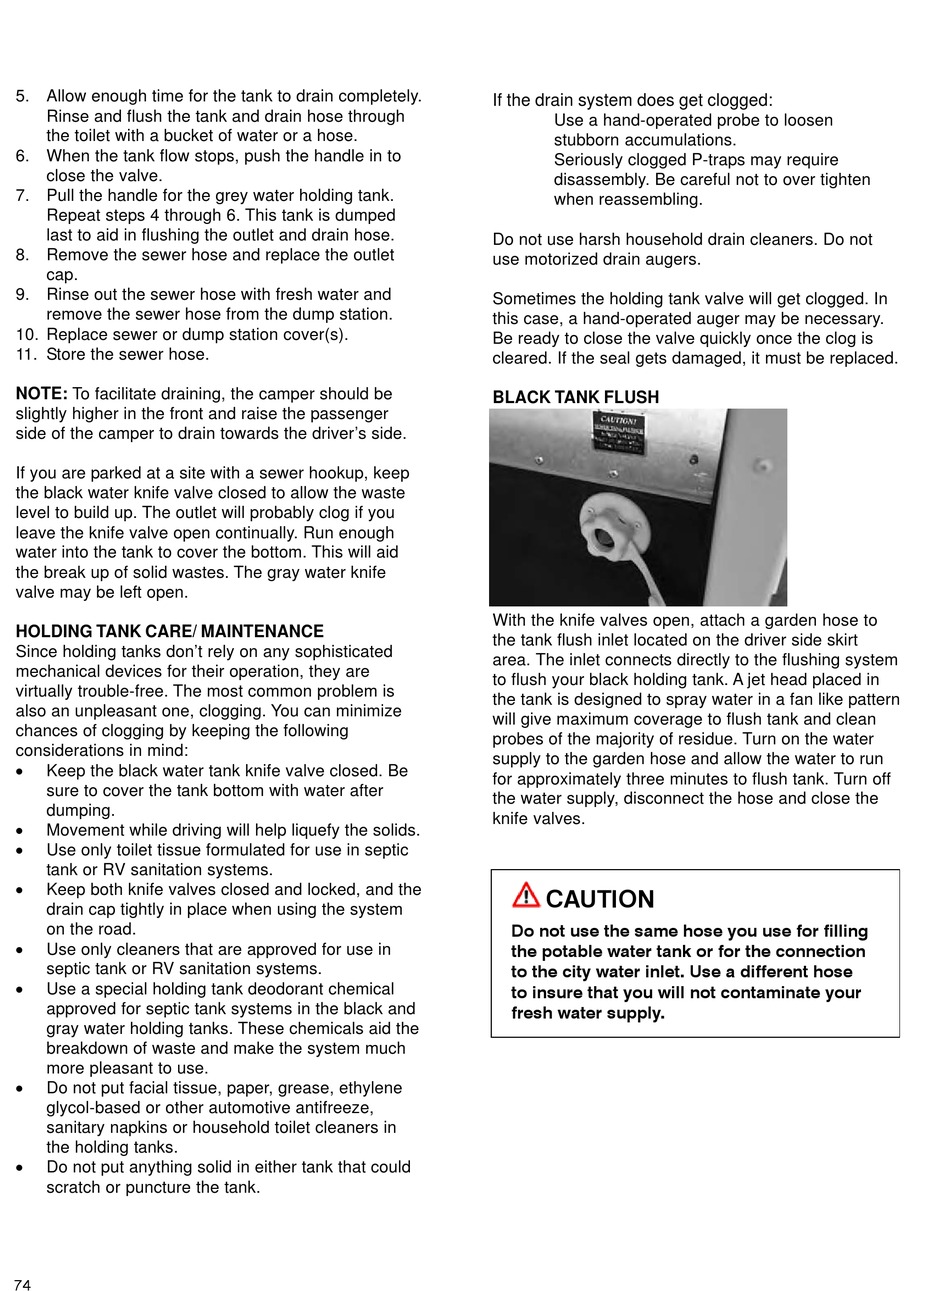 Holding Tank Care/Maintenance; Black Tank Flush - Lance Truck Camper  Owner's Manual [Page 74]